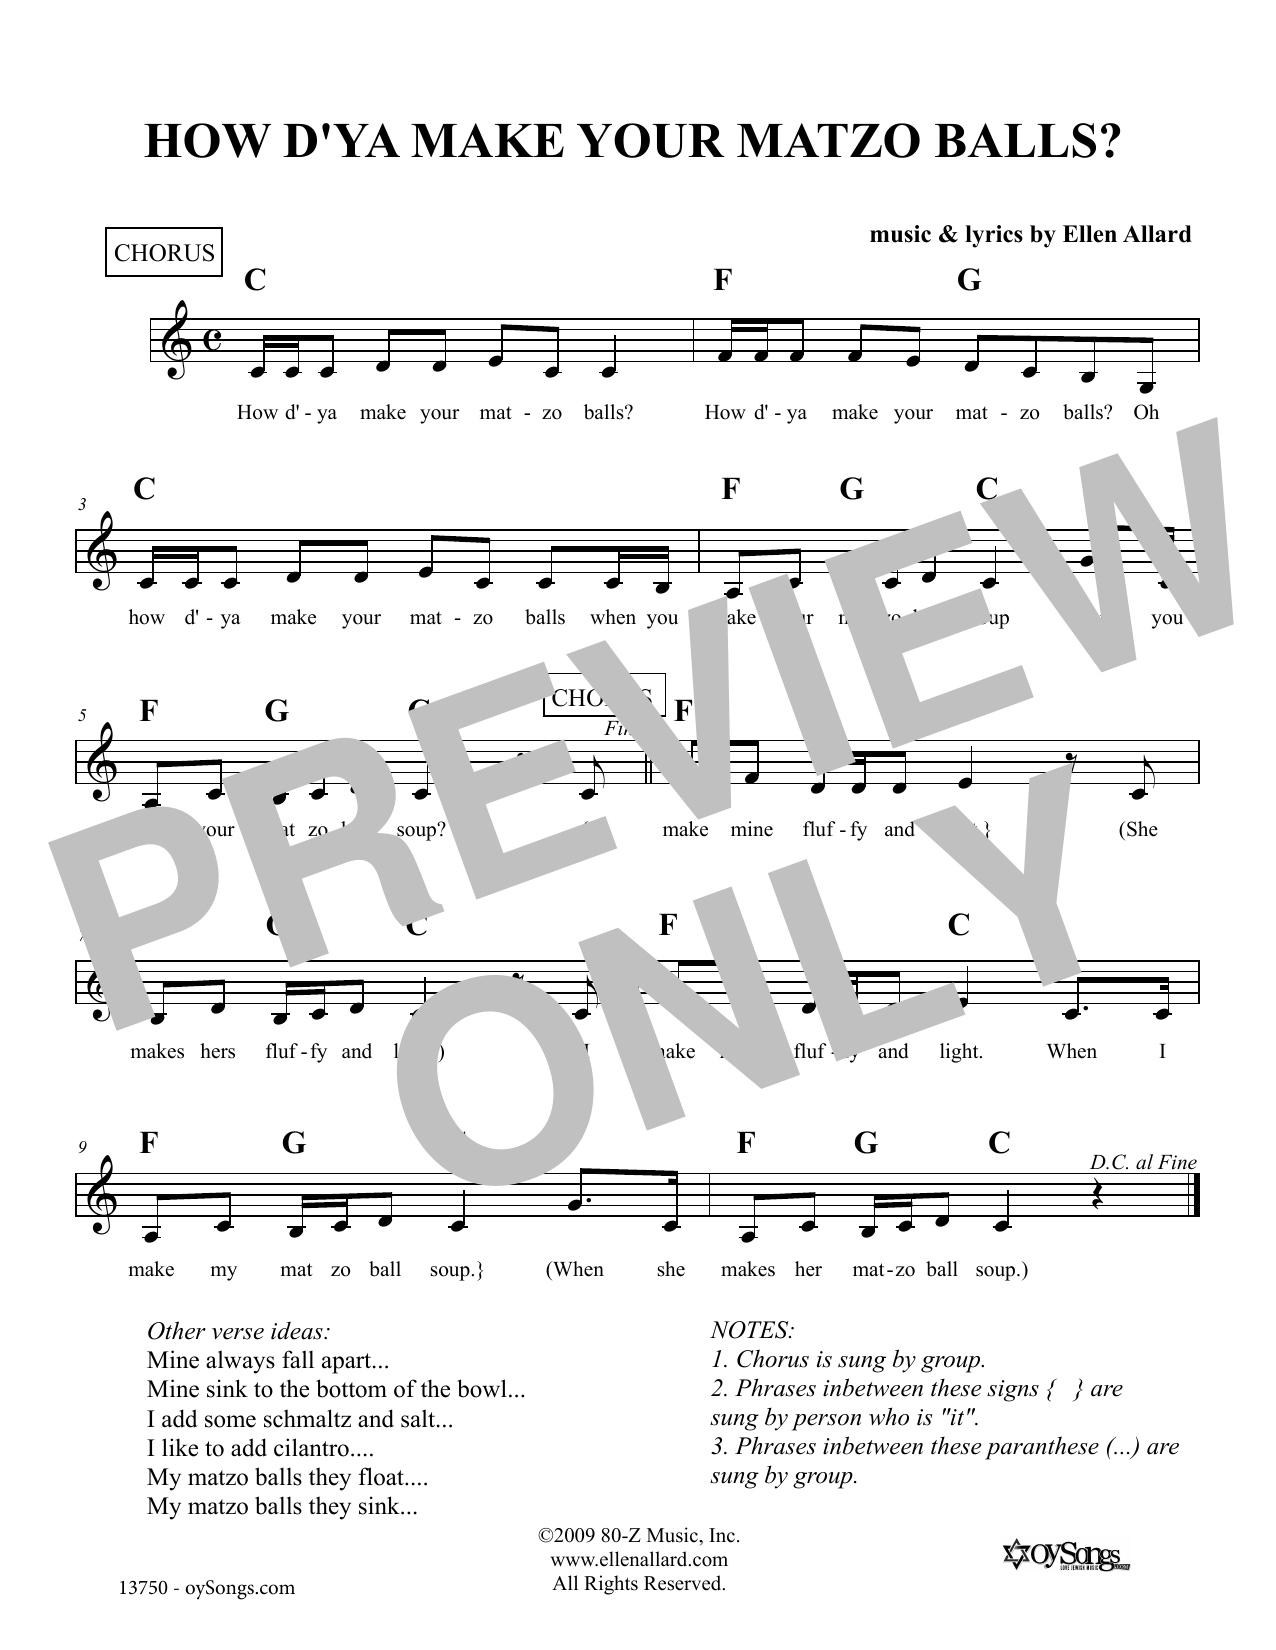 Ellen Allard How Do You Make Your Matzo Balls sheet music notes and chords. Download Printable PDF.